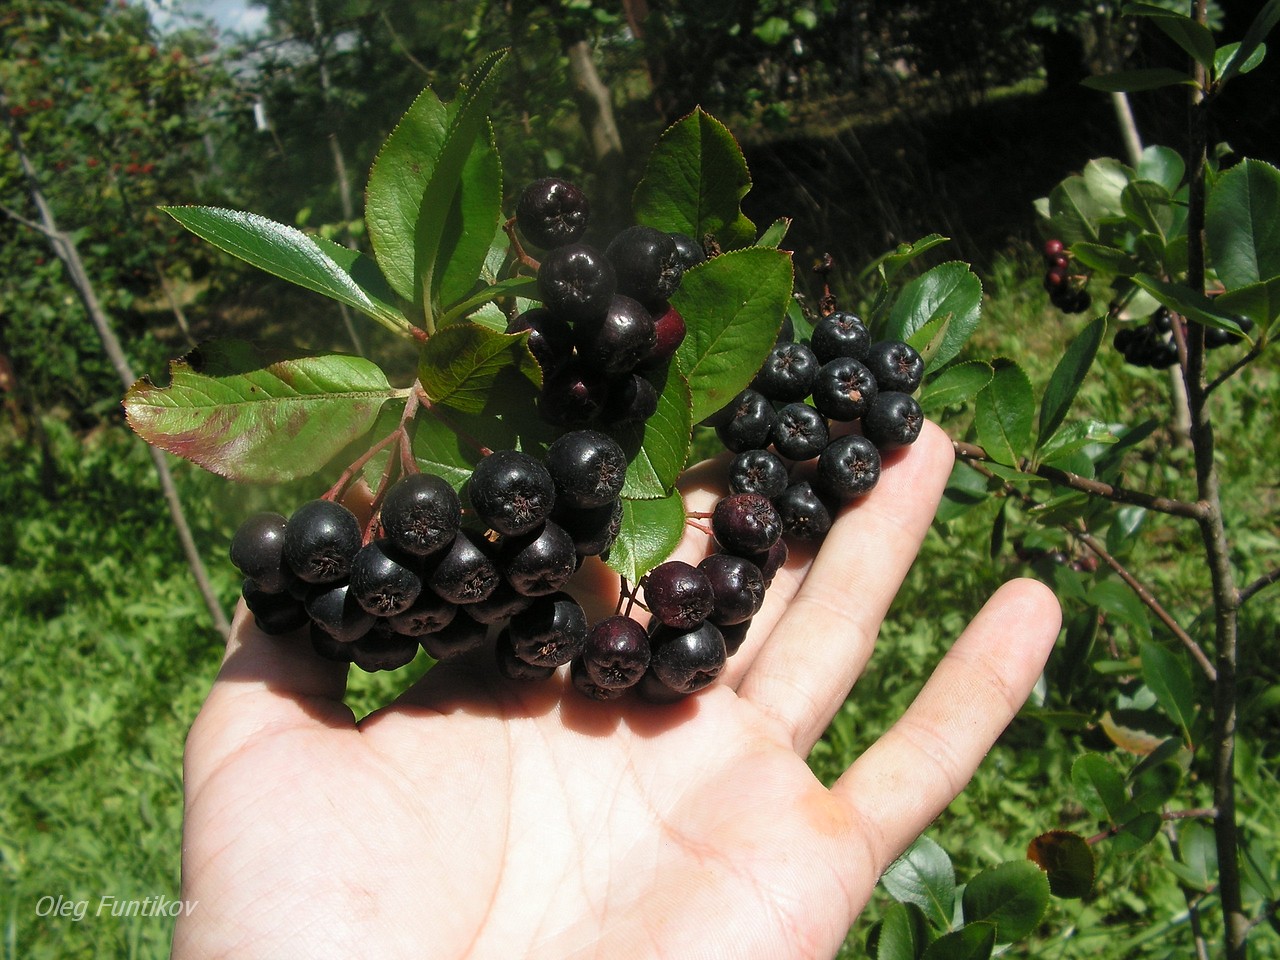 http://gardener.klandaic.com/potokadr/berries/22chokeberry3.jpg